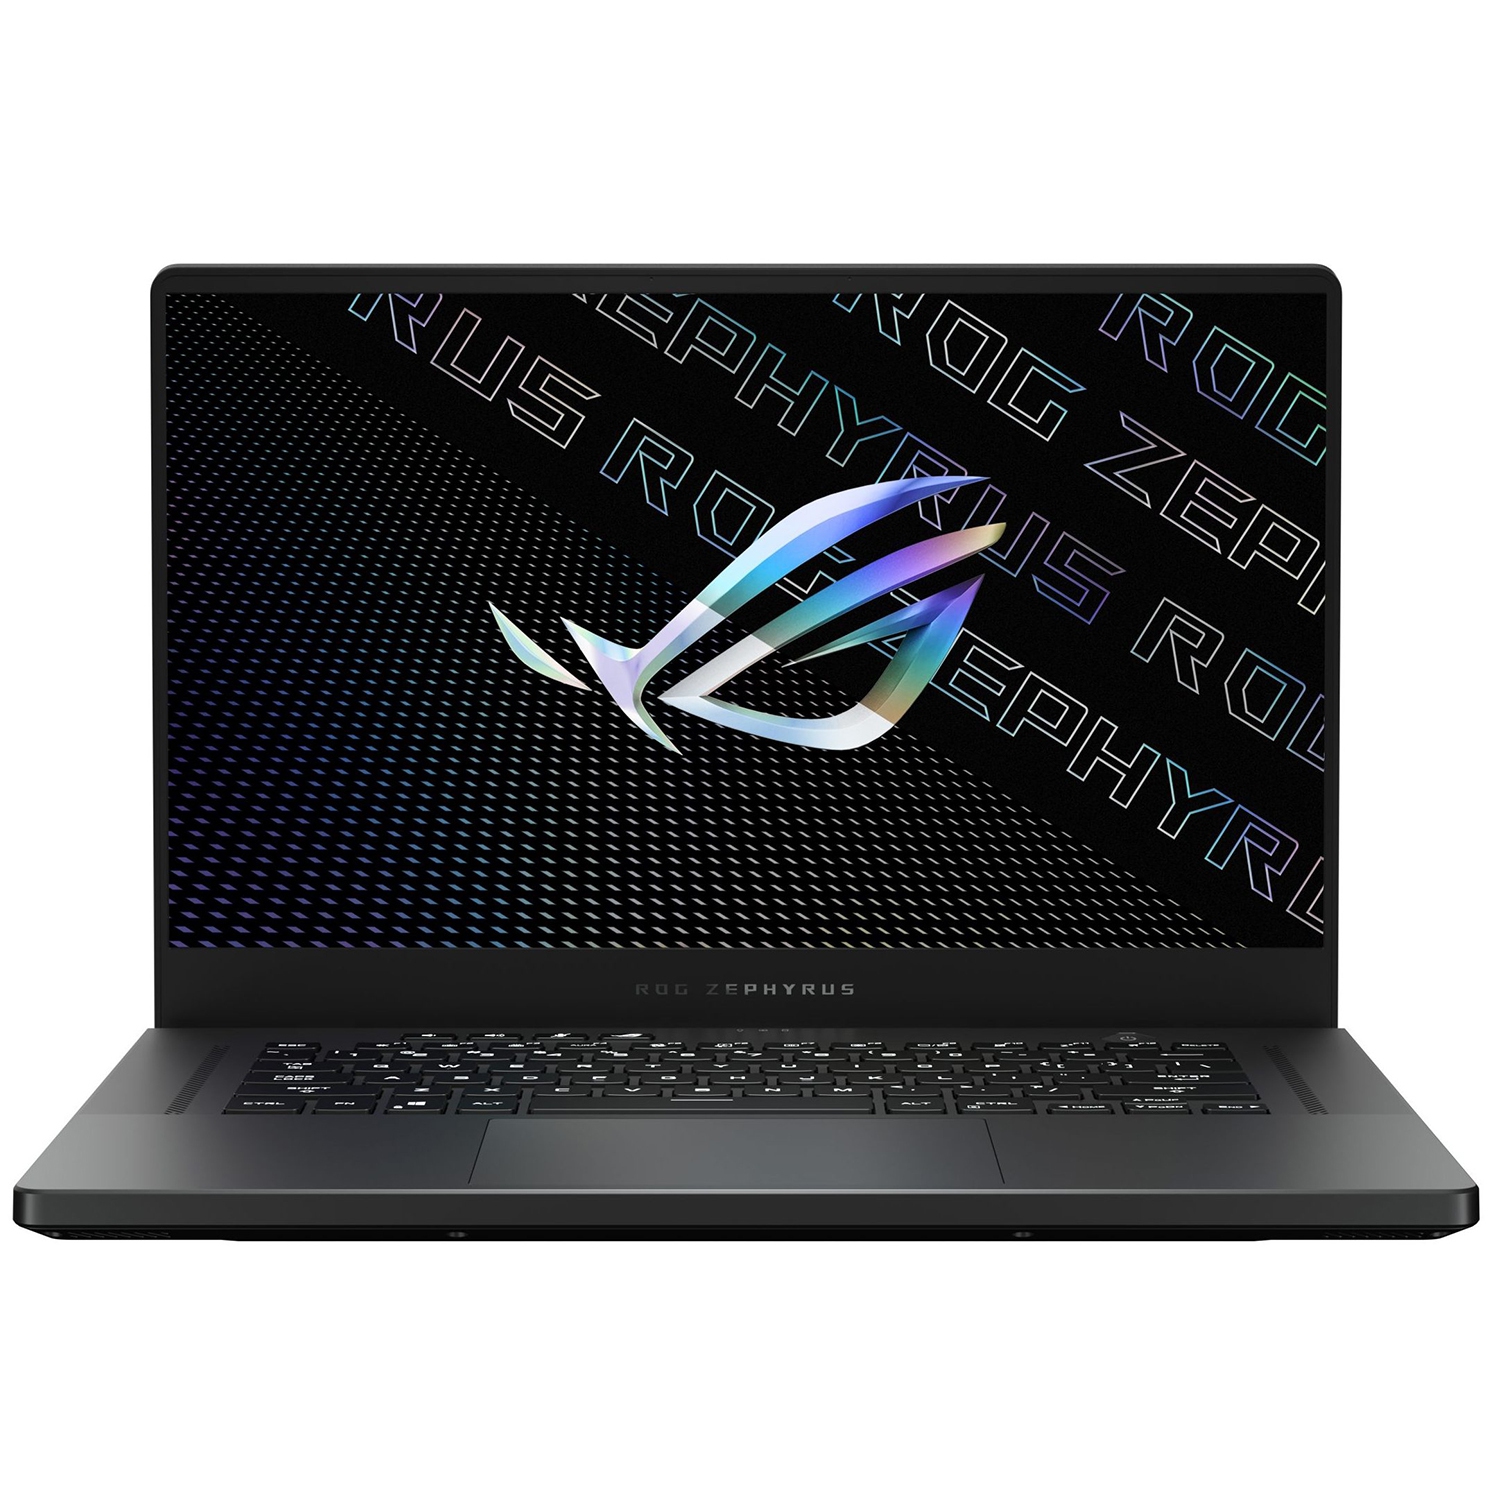 Custom ASUS ROG Zephyrus G15 Laptop (AMD Ryzen 9 5900HS, 40GB RAM, 512GB PCIe SSD, NVIDIA RTX 3060, Win 10 Home)